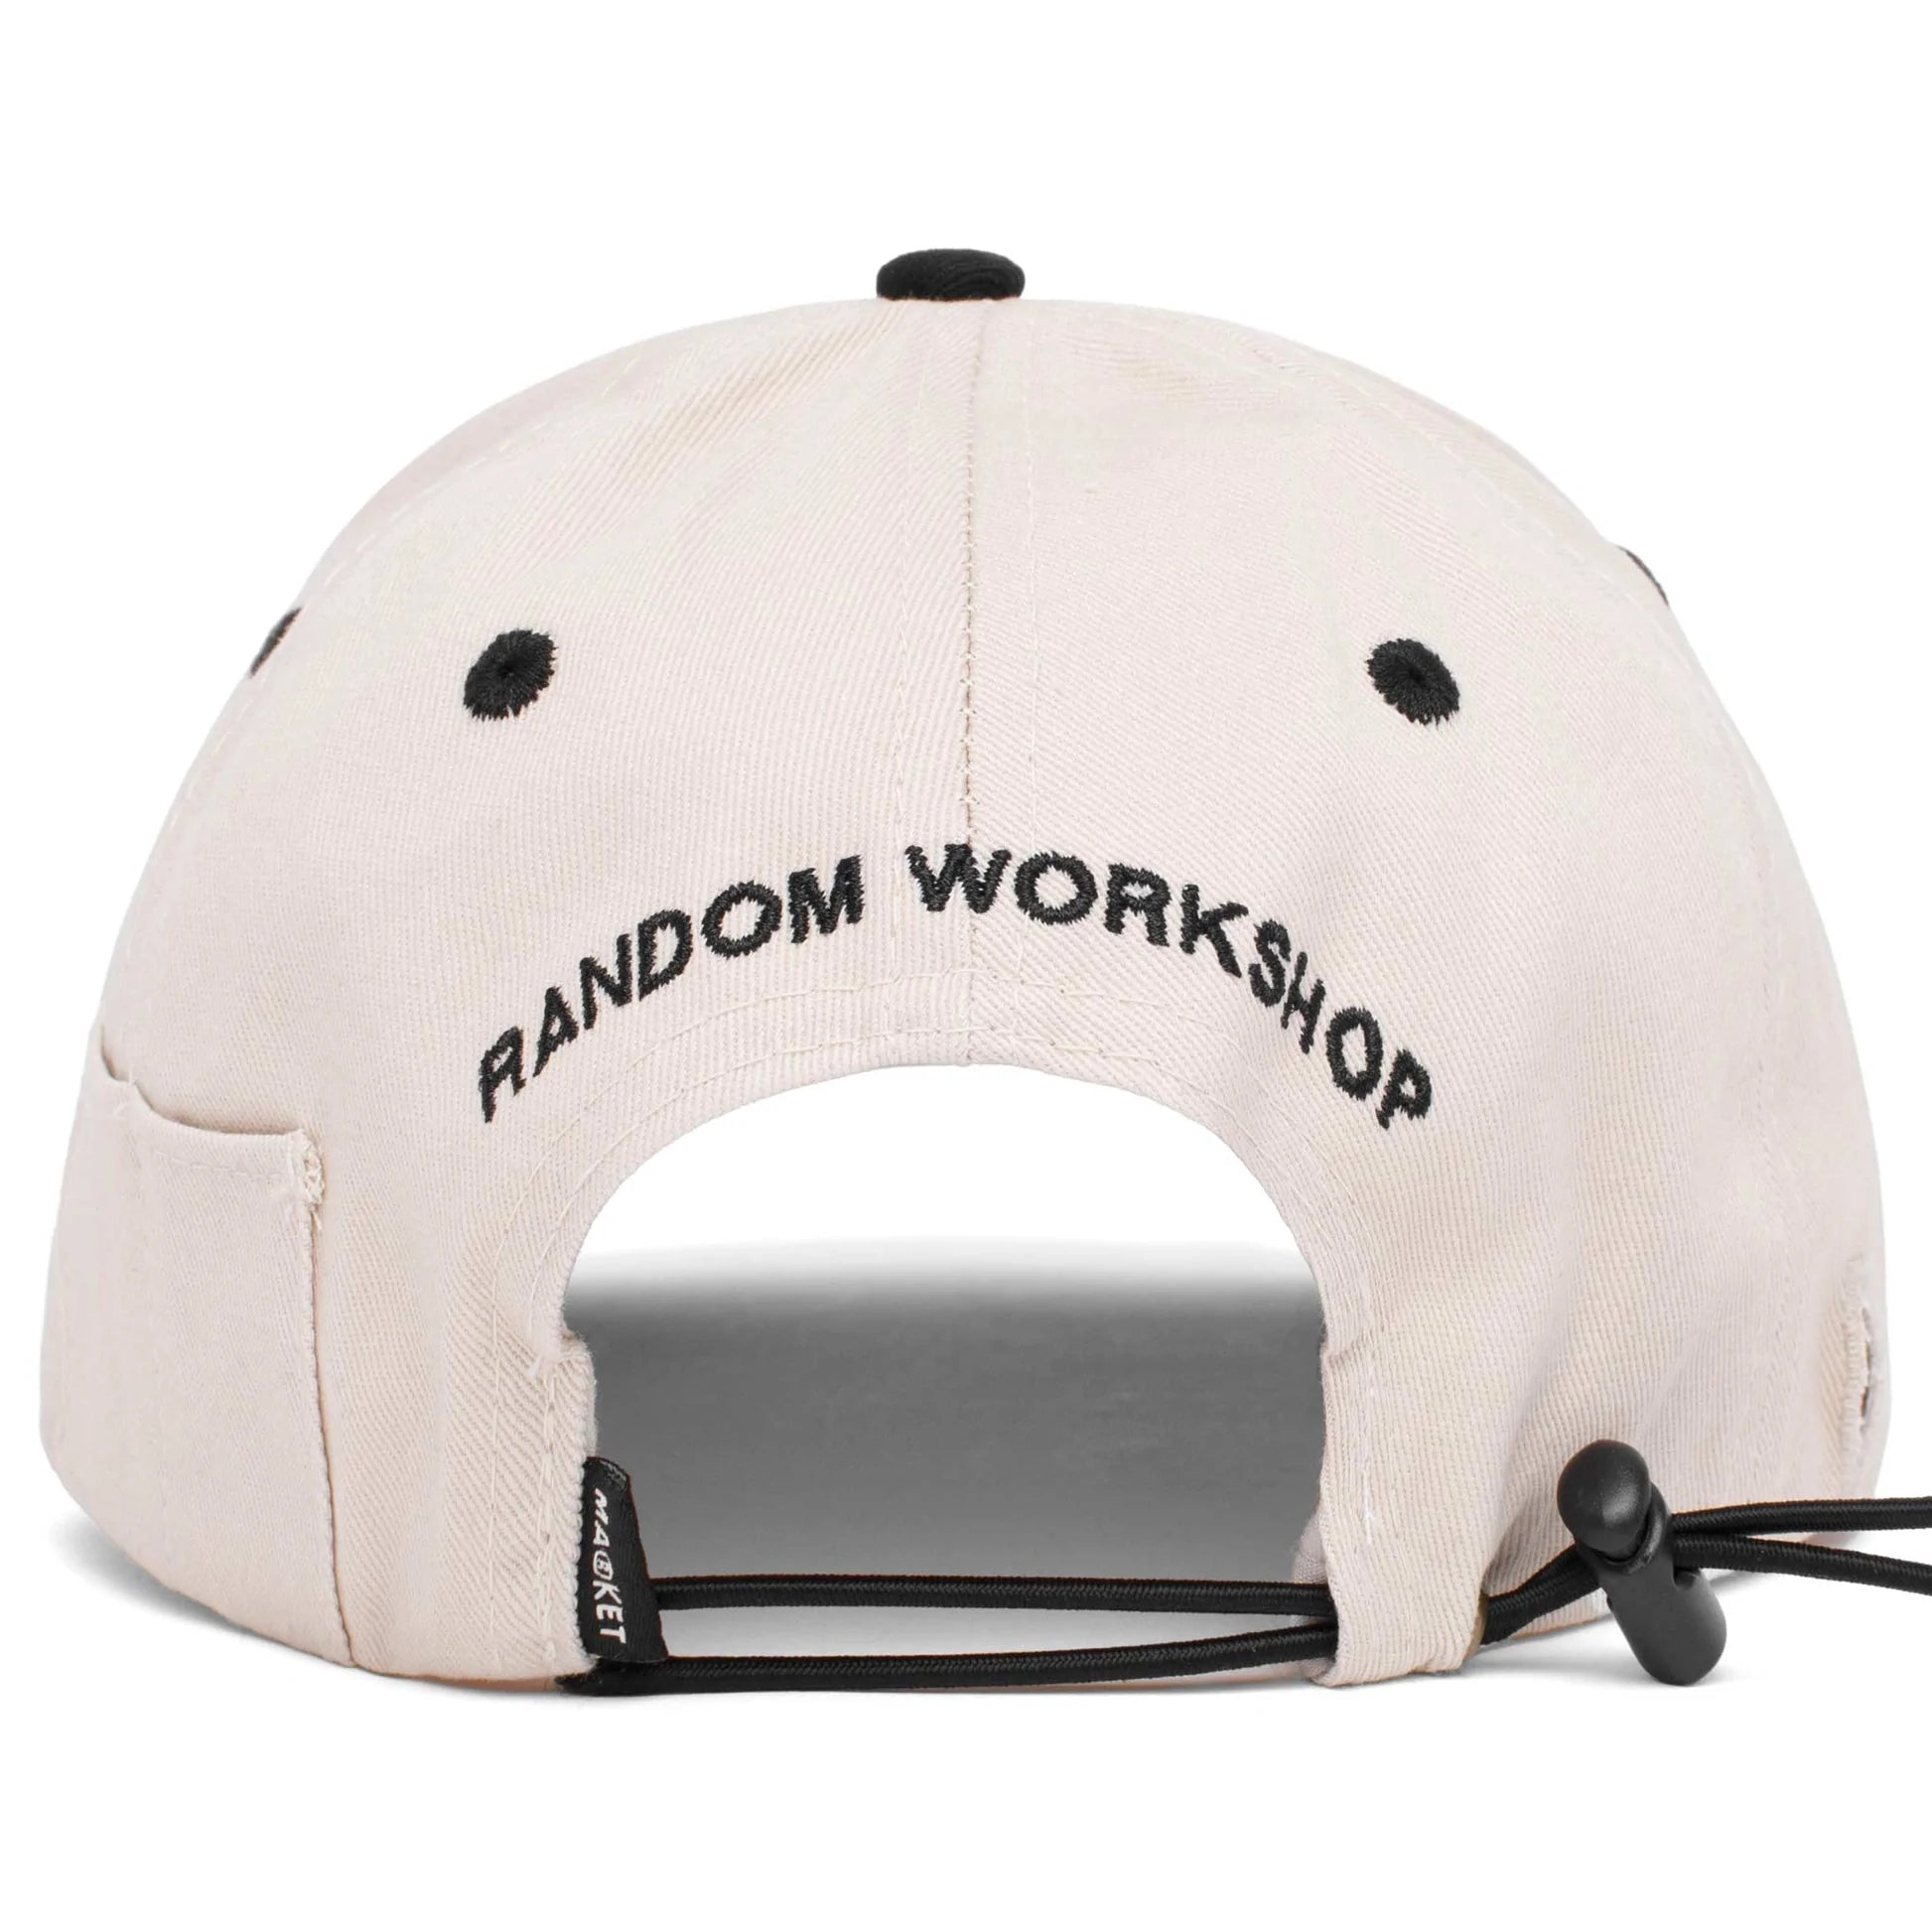 RANDOM WORKSHOP TOOL HOLDER HAT